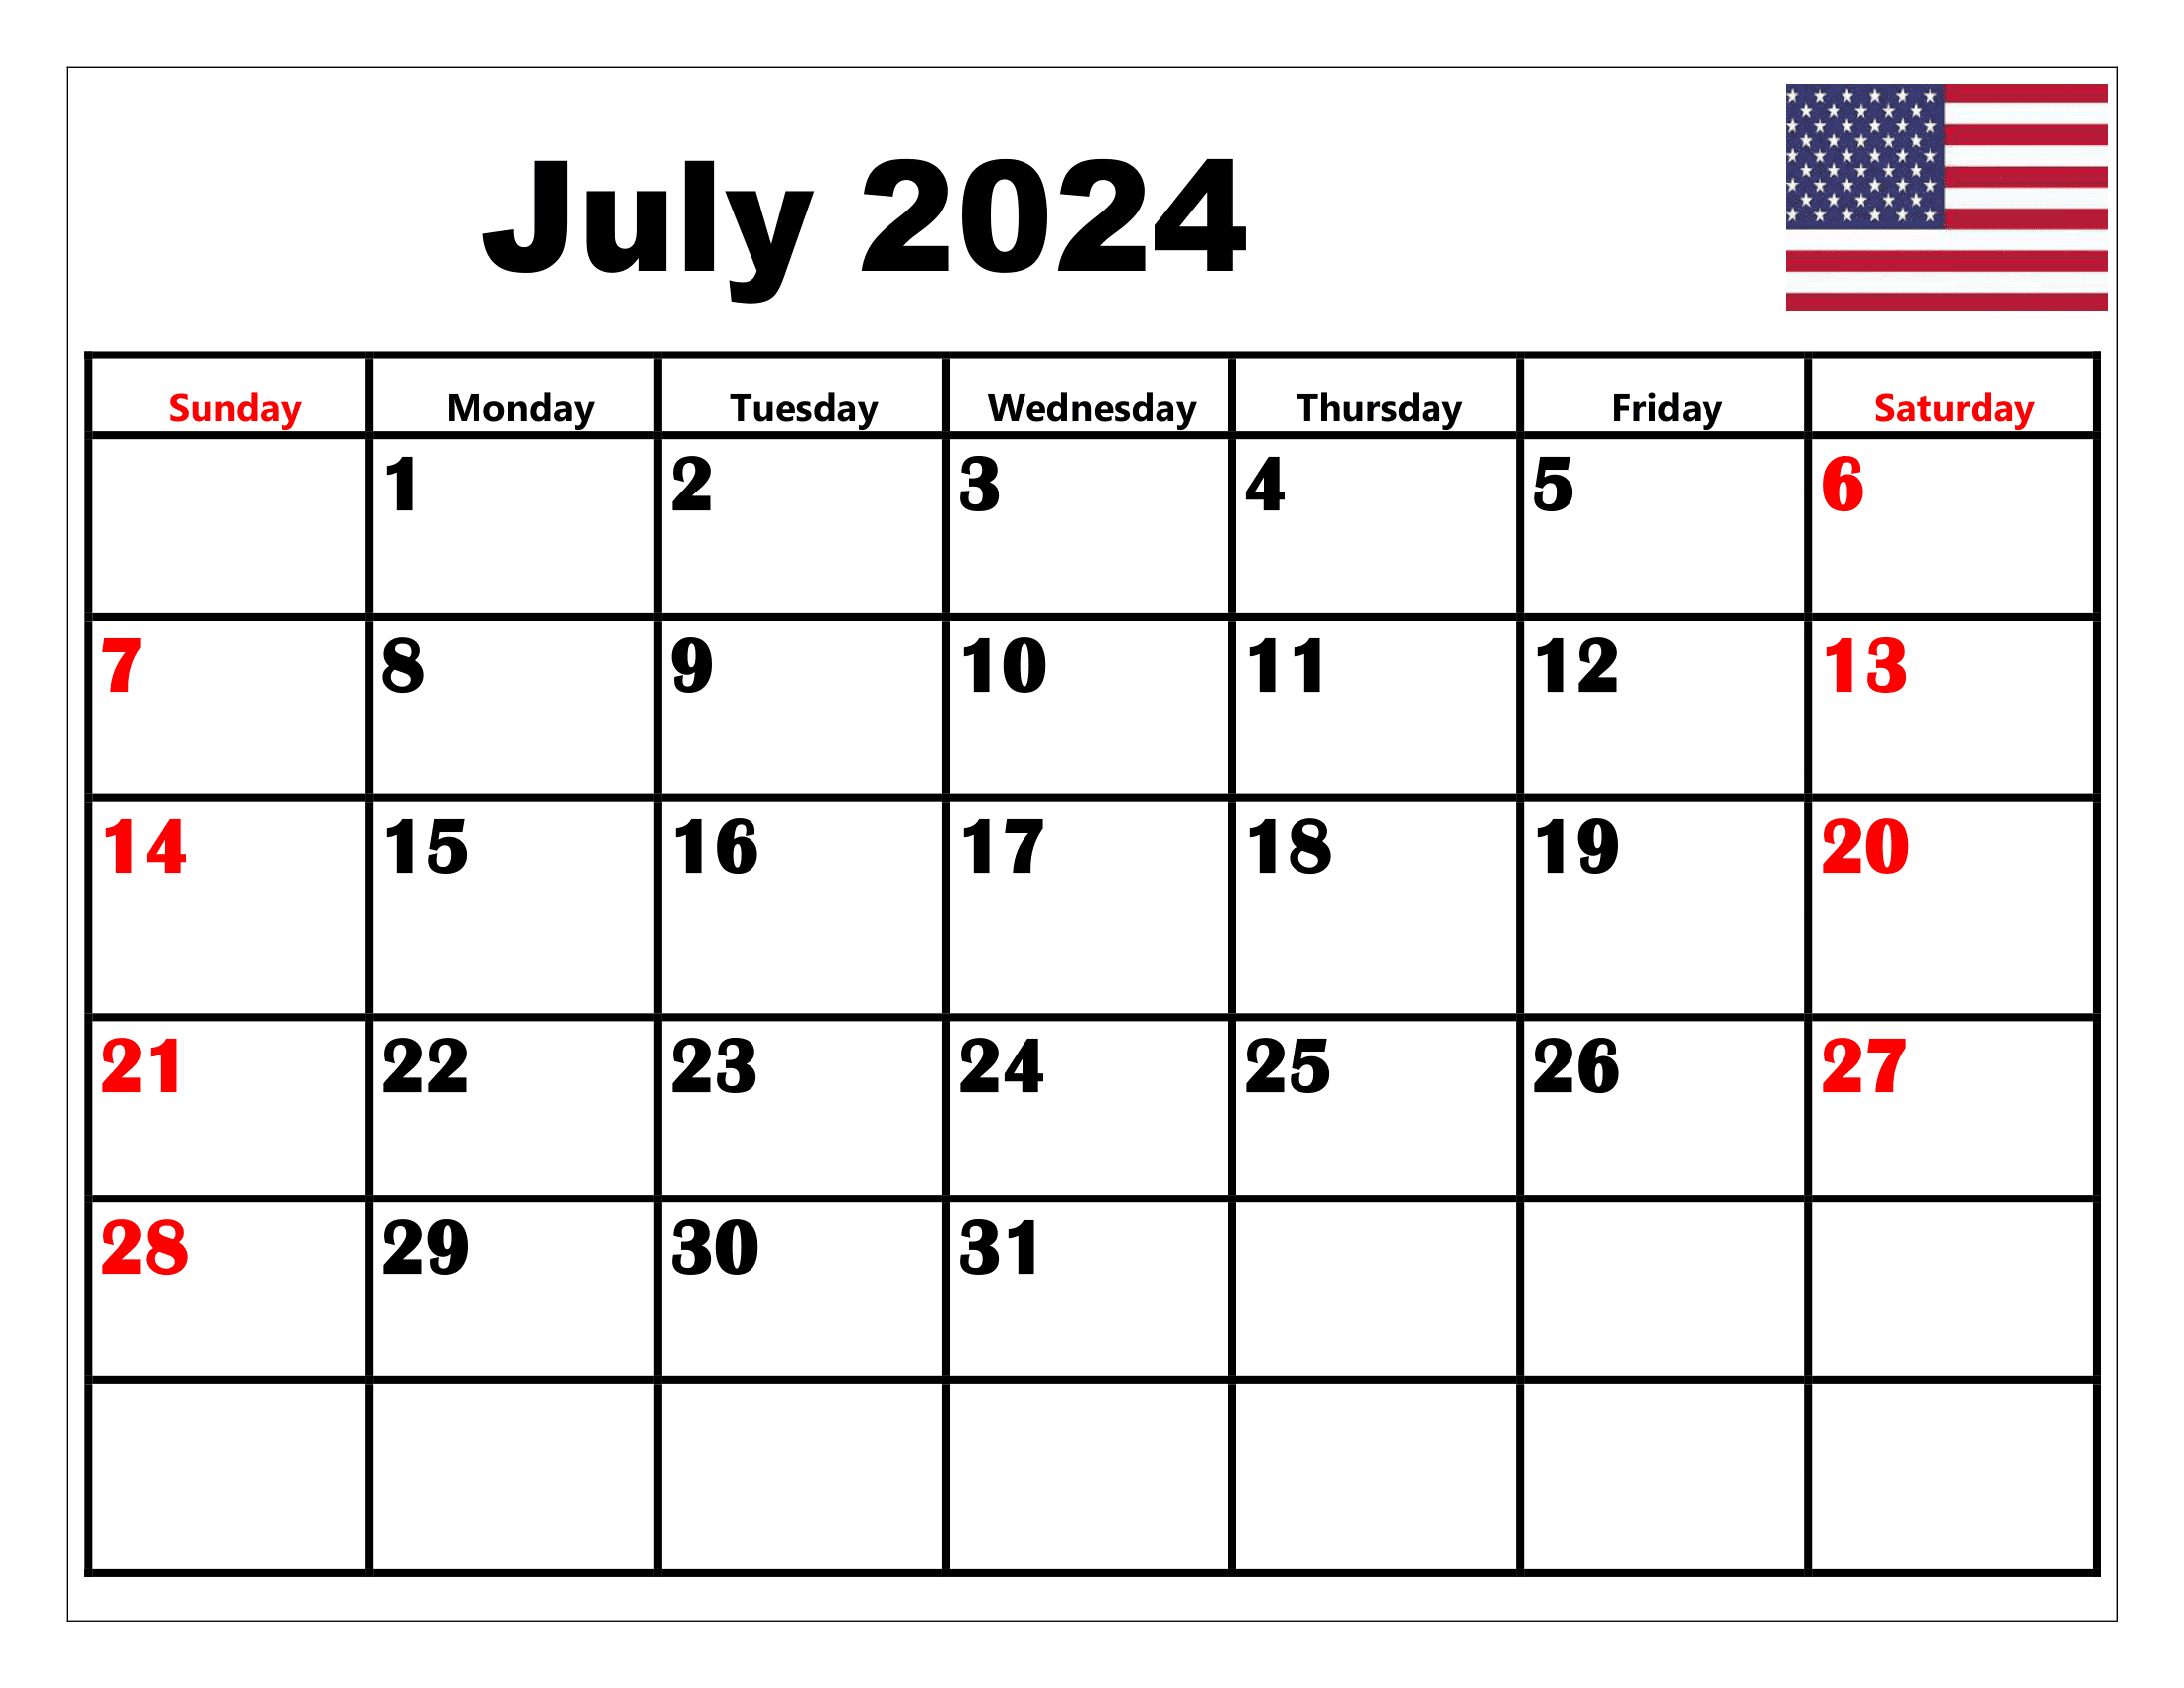 July 2024 Calendar Printable Pdf With Holidays Free Template with July 2024 Holiday Calendar